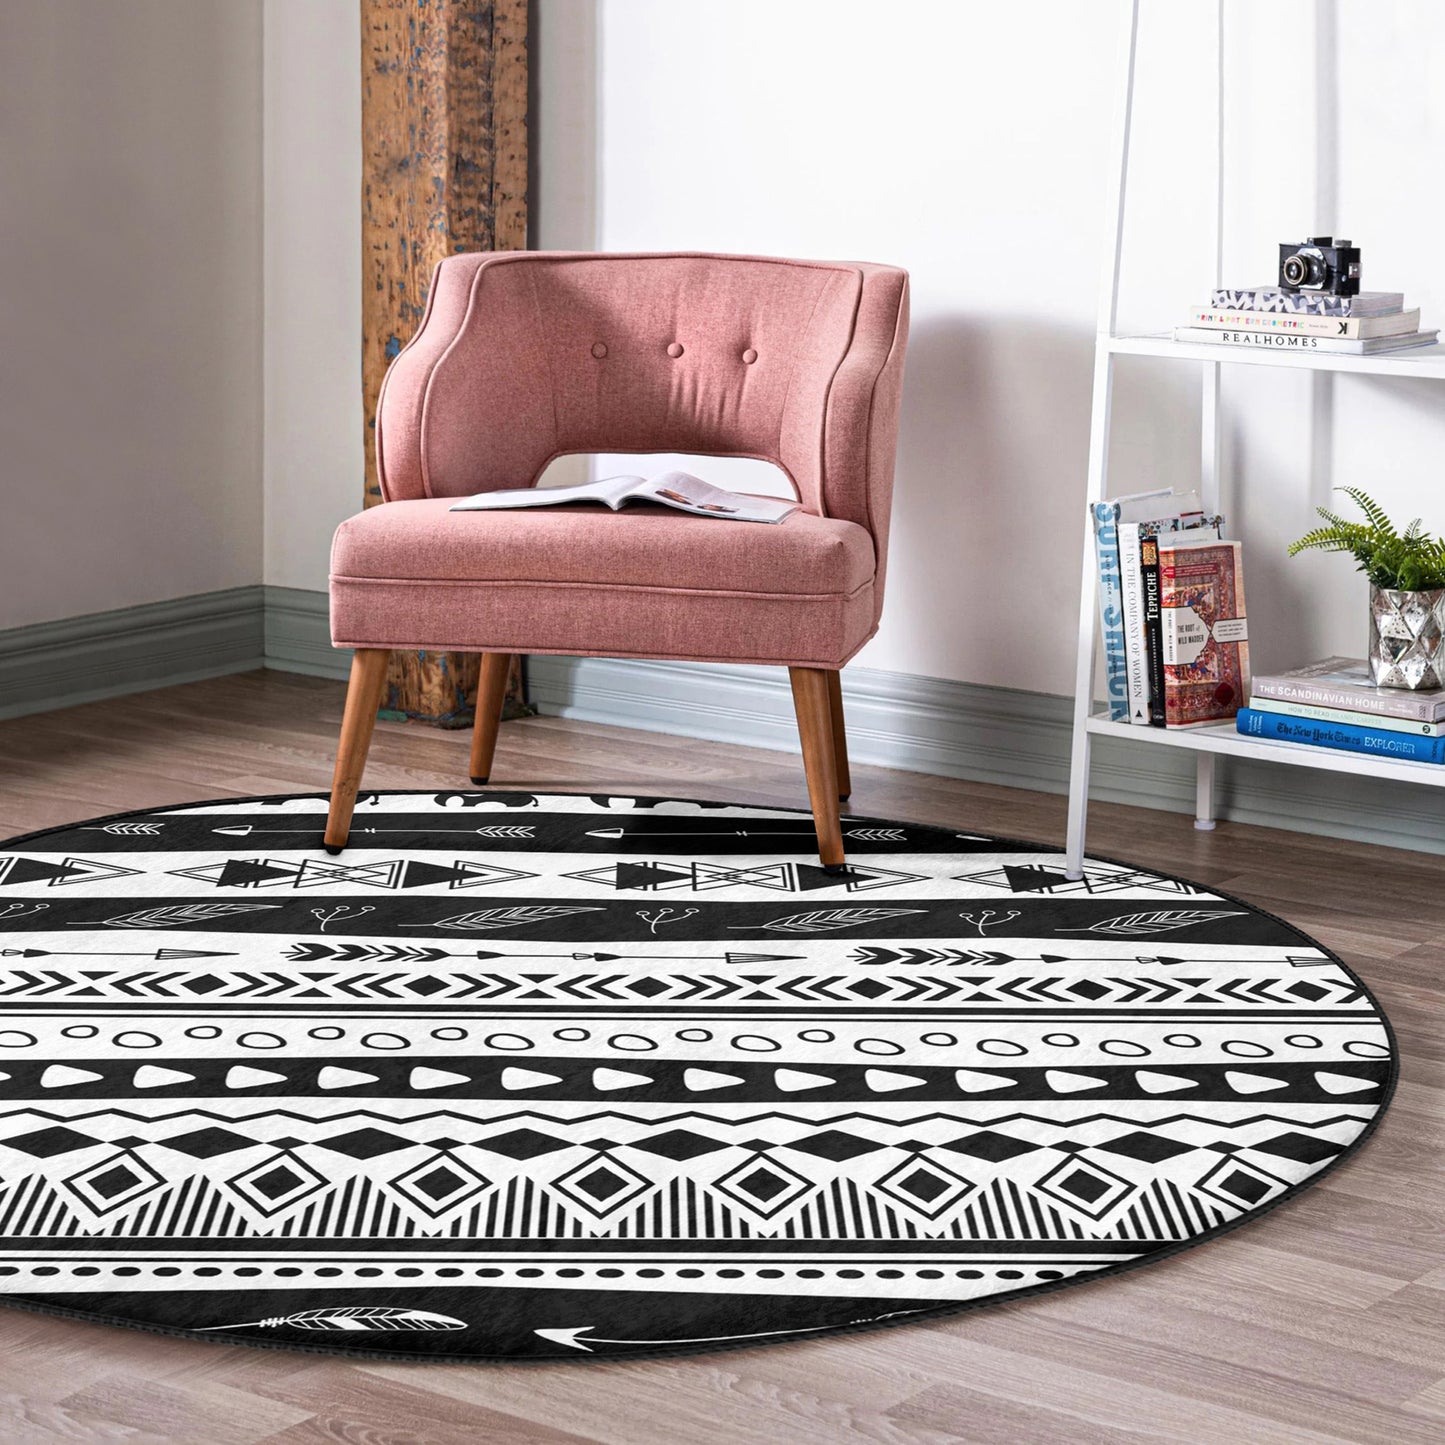 Round Patterned Floor Rug - Versatile Home Decor